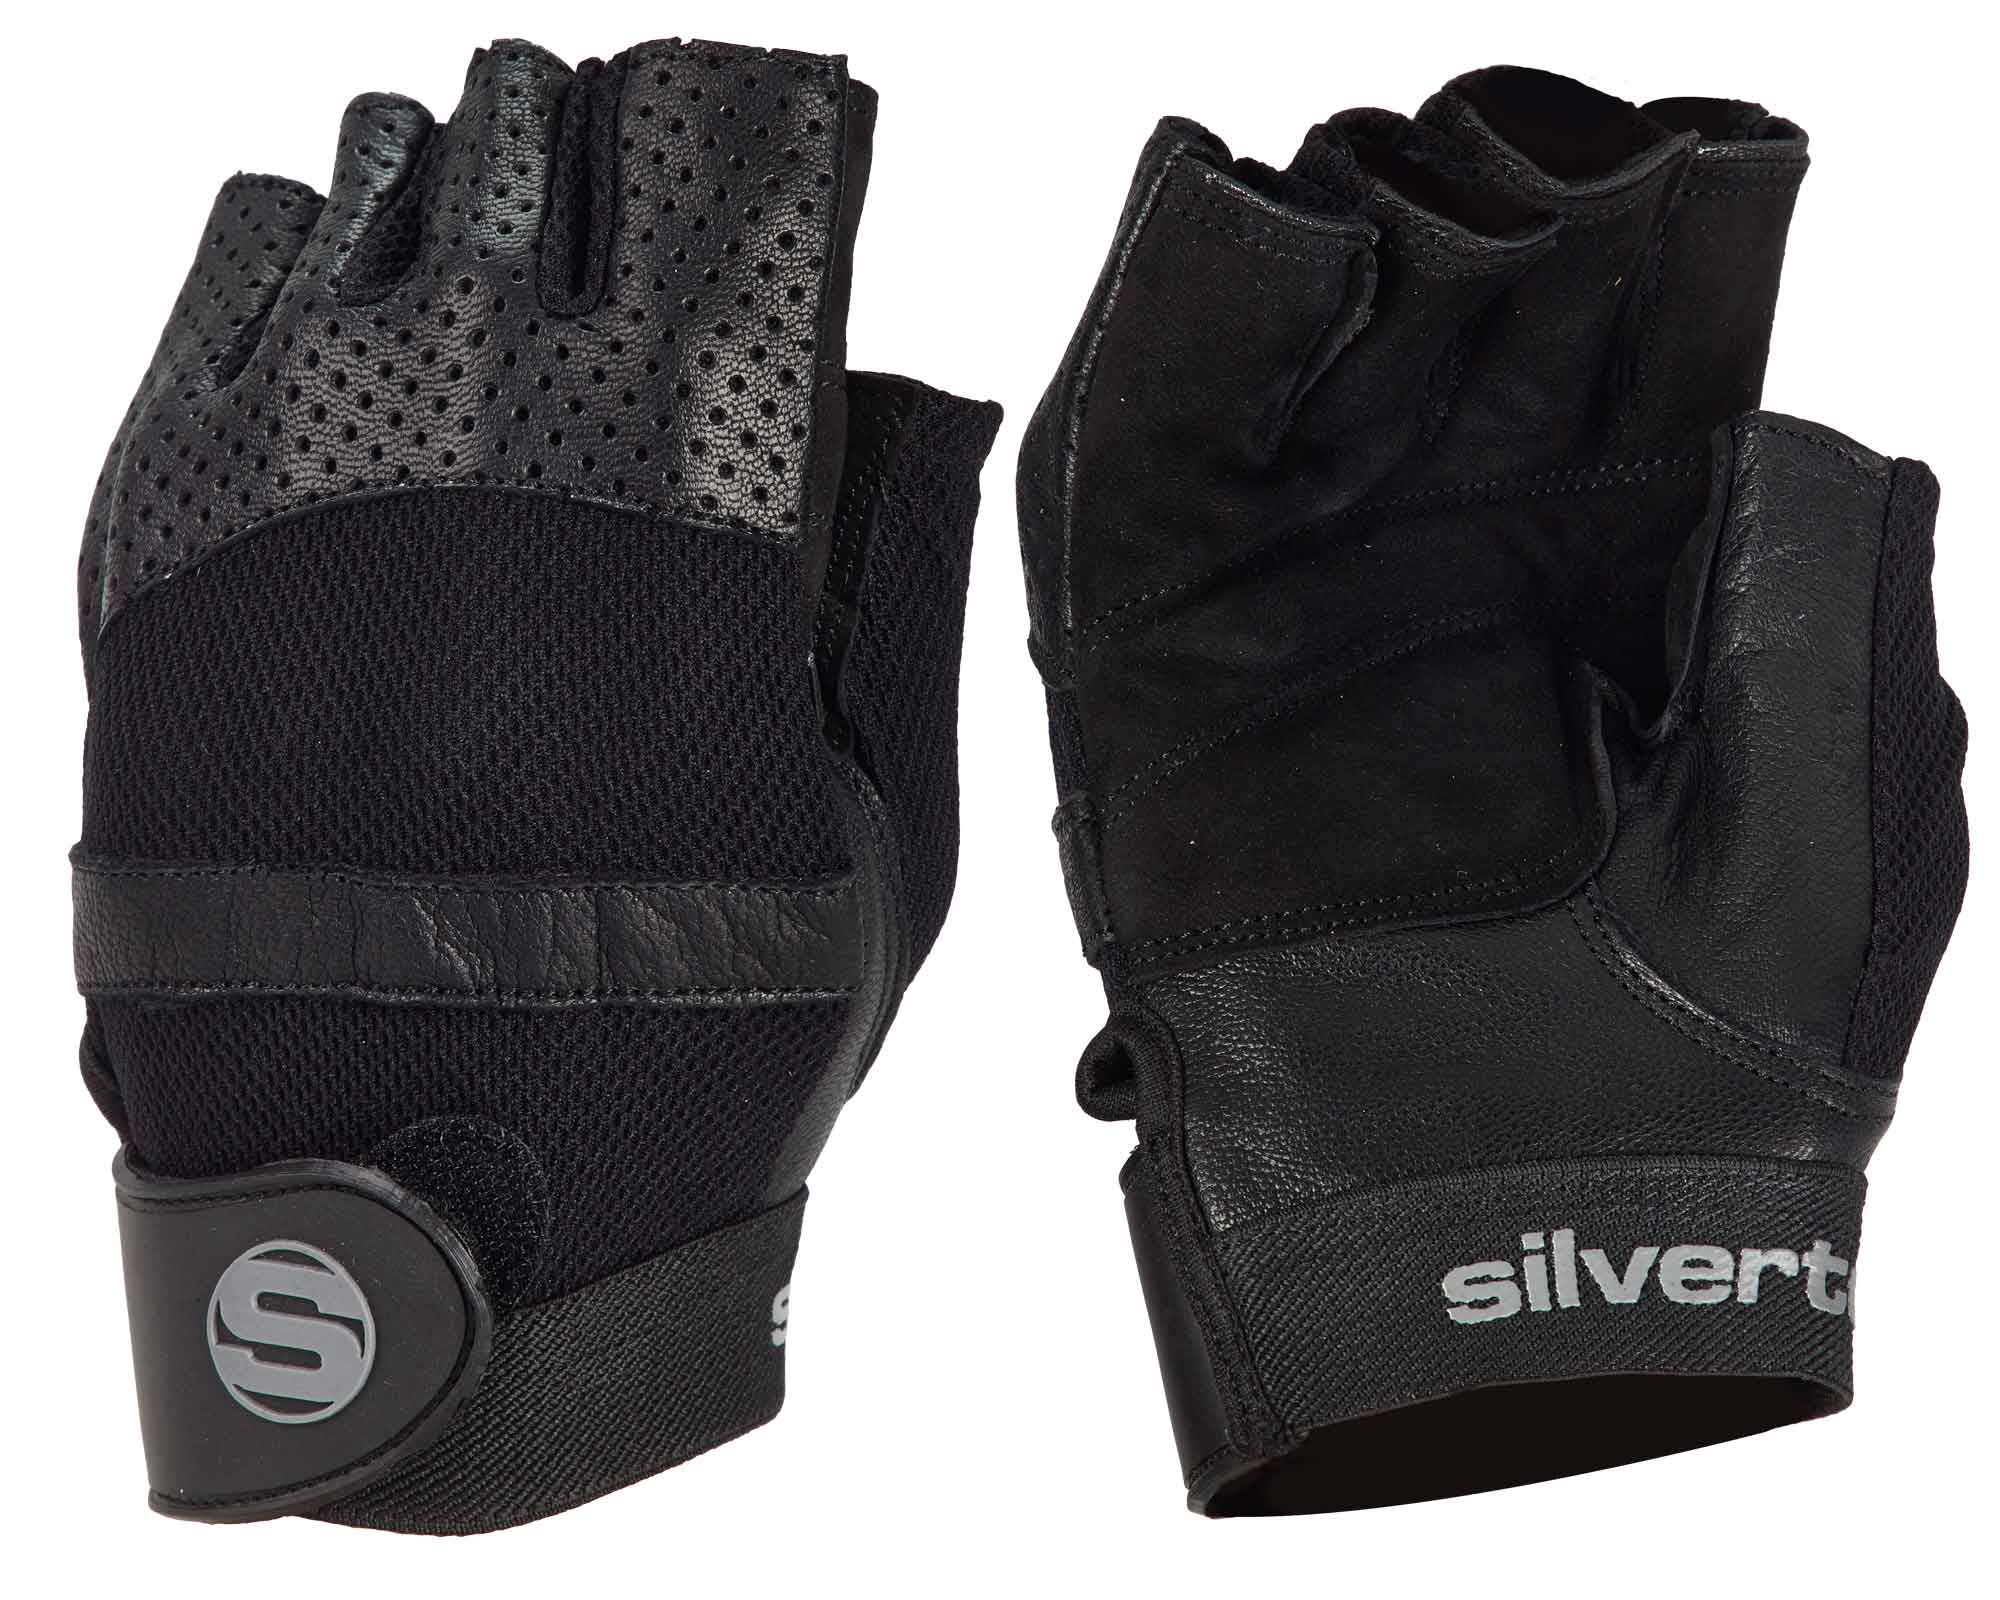 Silverton Training Gloves Pro Plus 43143